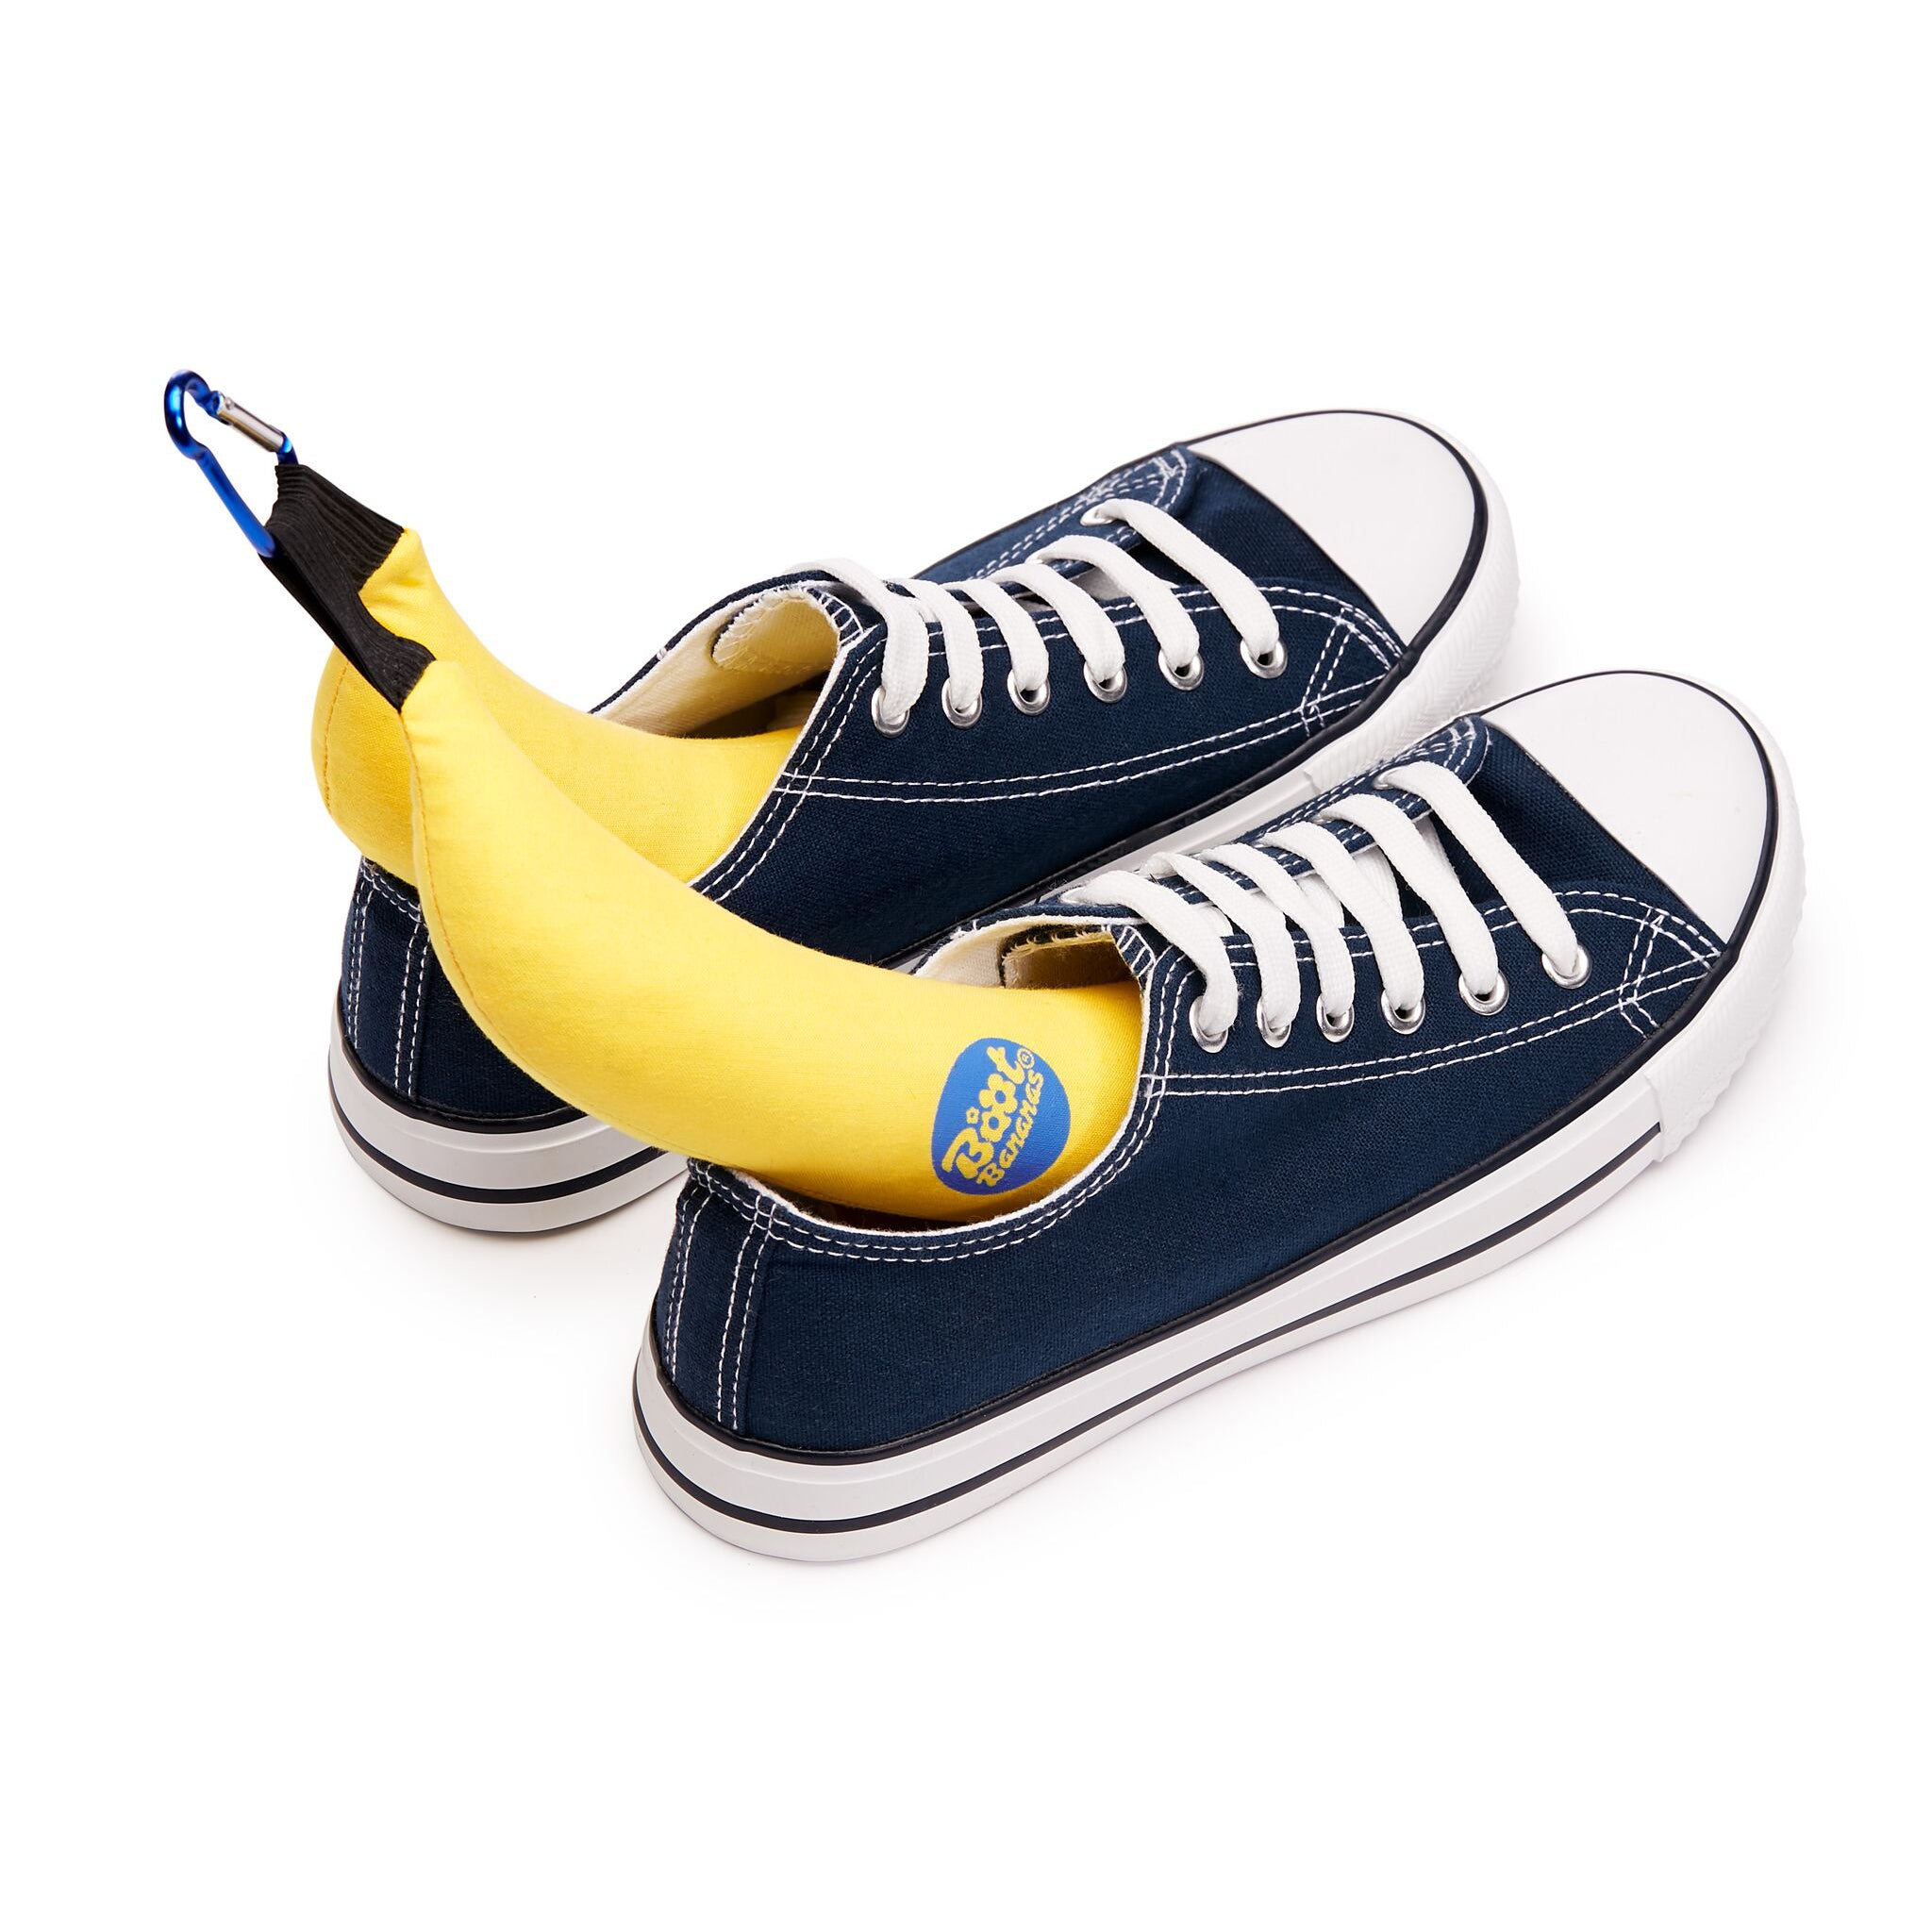 Boot Bananas - Rock+Run